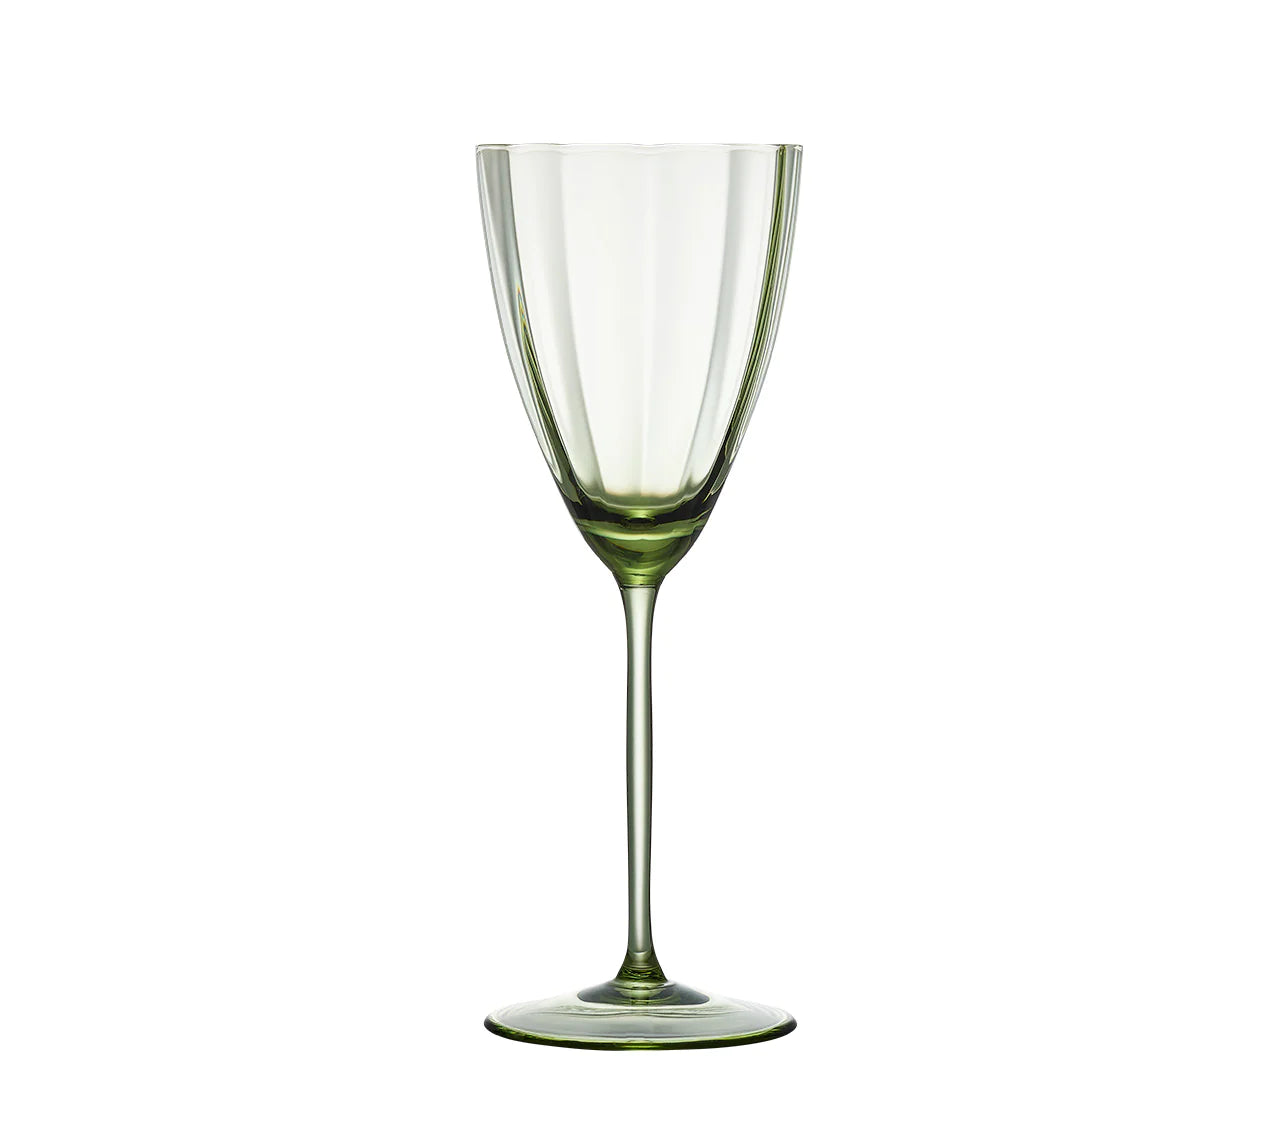 Luna Wine Glass in Green, Set of 4